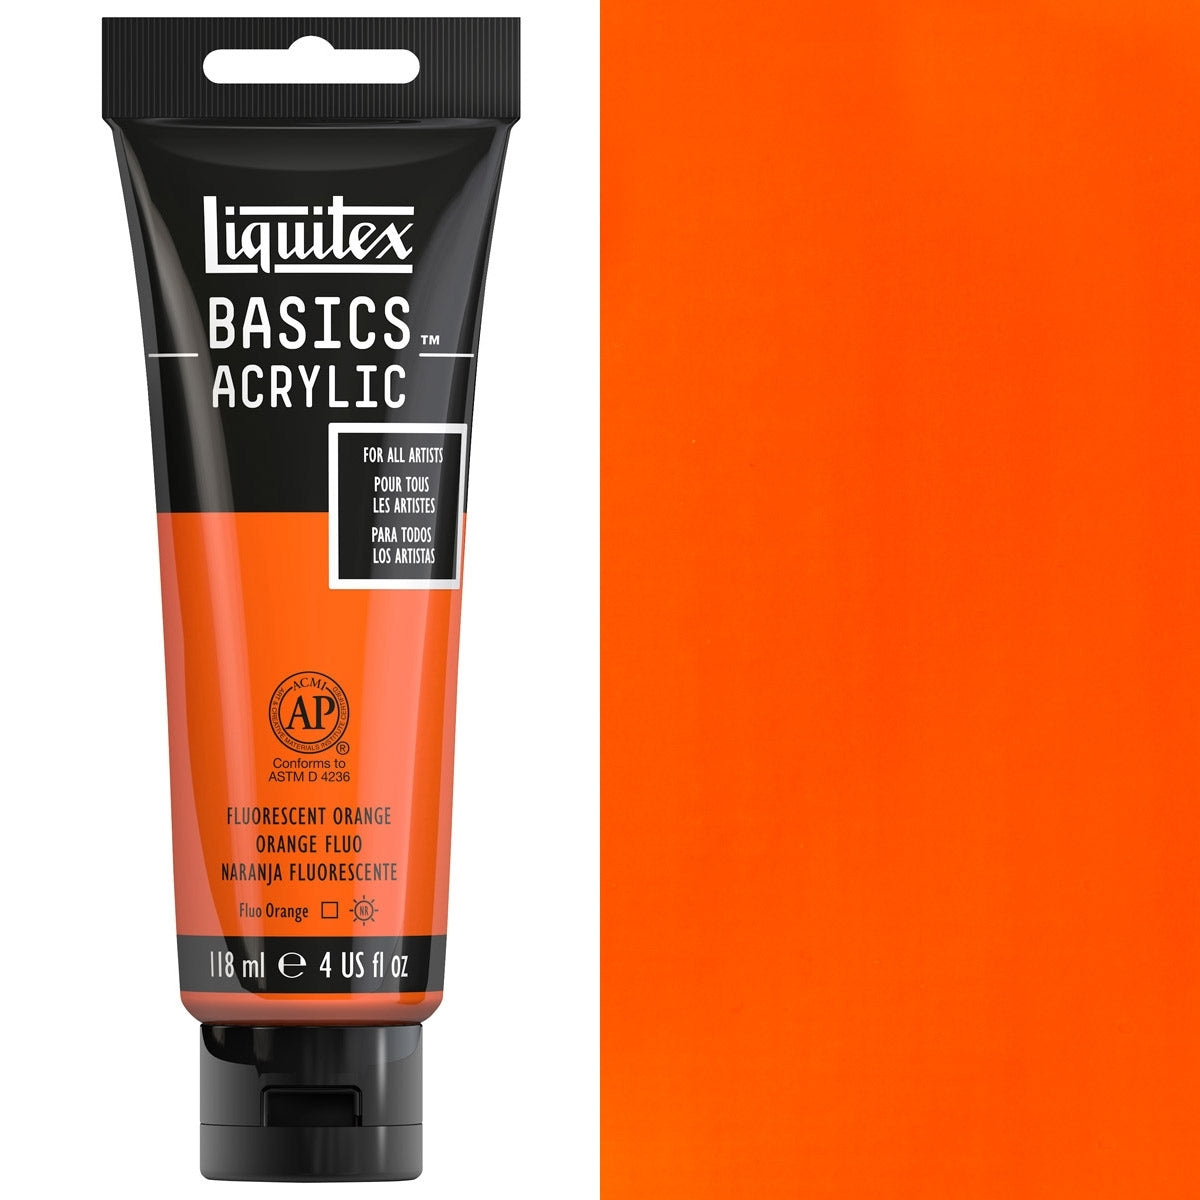 Liquitex - Basics Acrylic Colour - 118ml - Fluorescent Orange